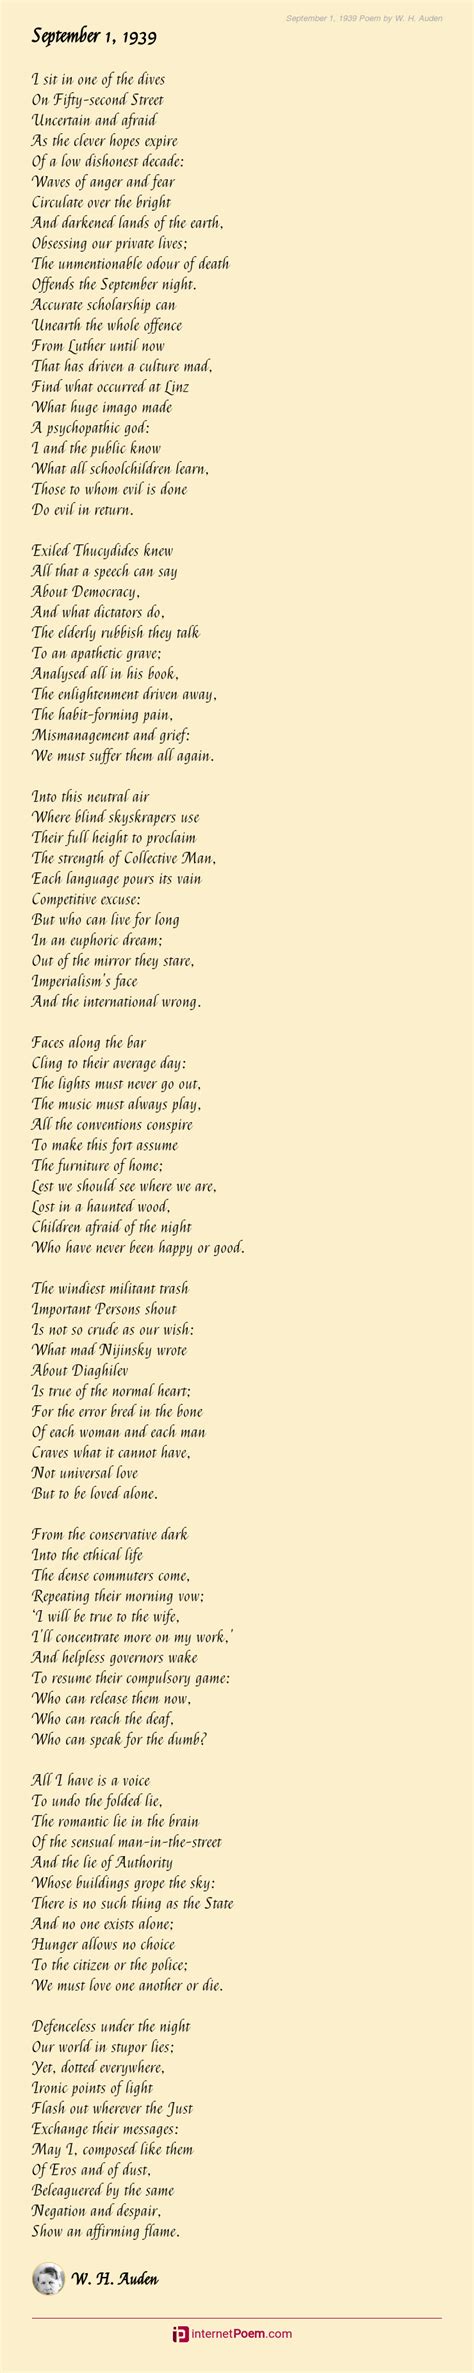 September 1 1939 Poem By W H Auden